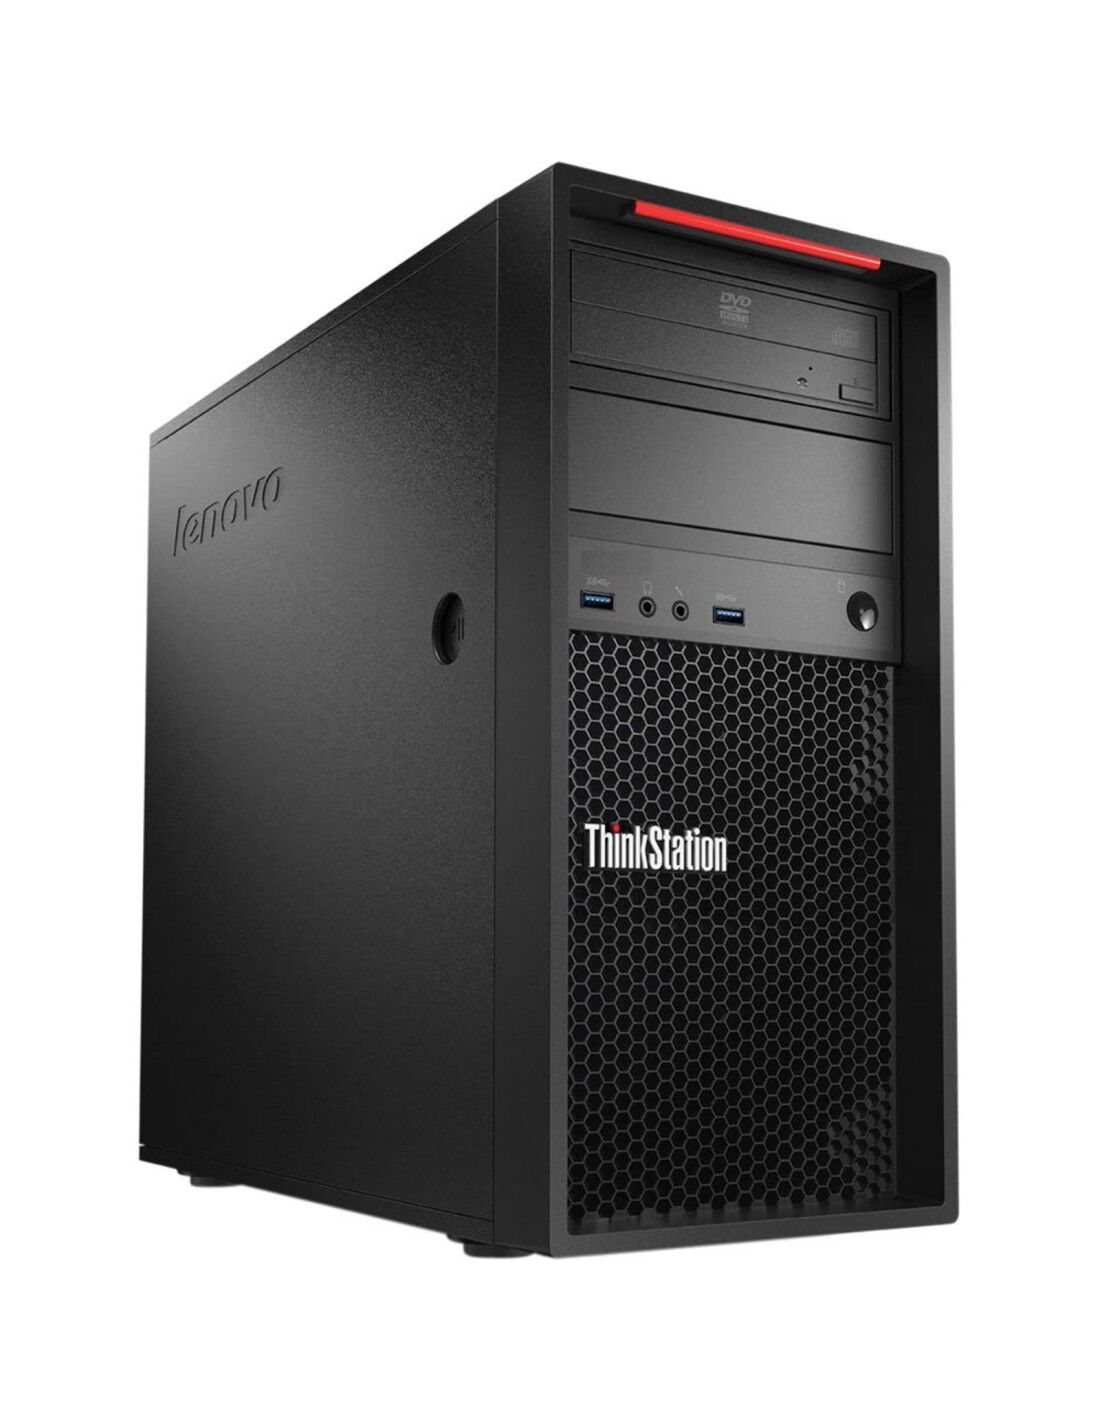 bLenovo ThinkStation P320 PC Computer Tower i7-6700 Ram 16Gb SSD 512Gb Freedos (Ricondizionato Grado A)